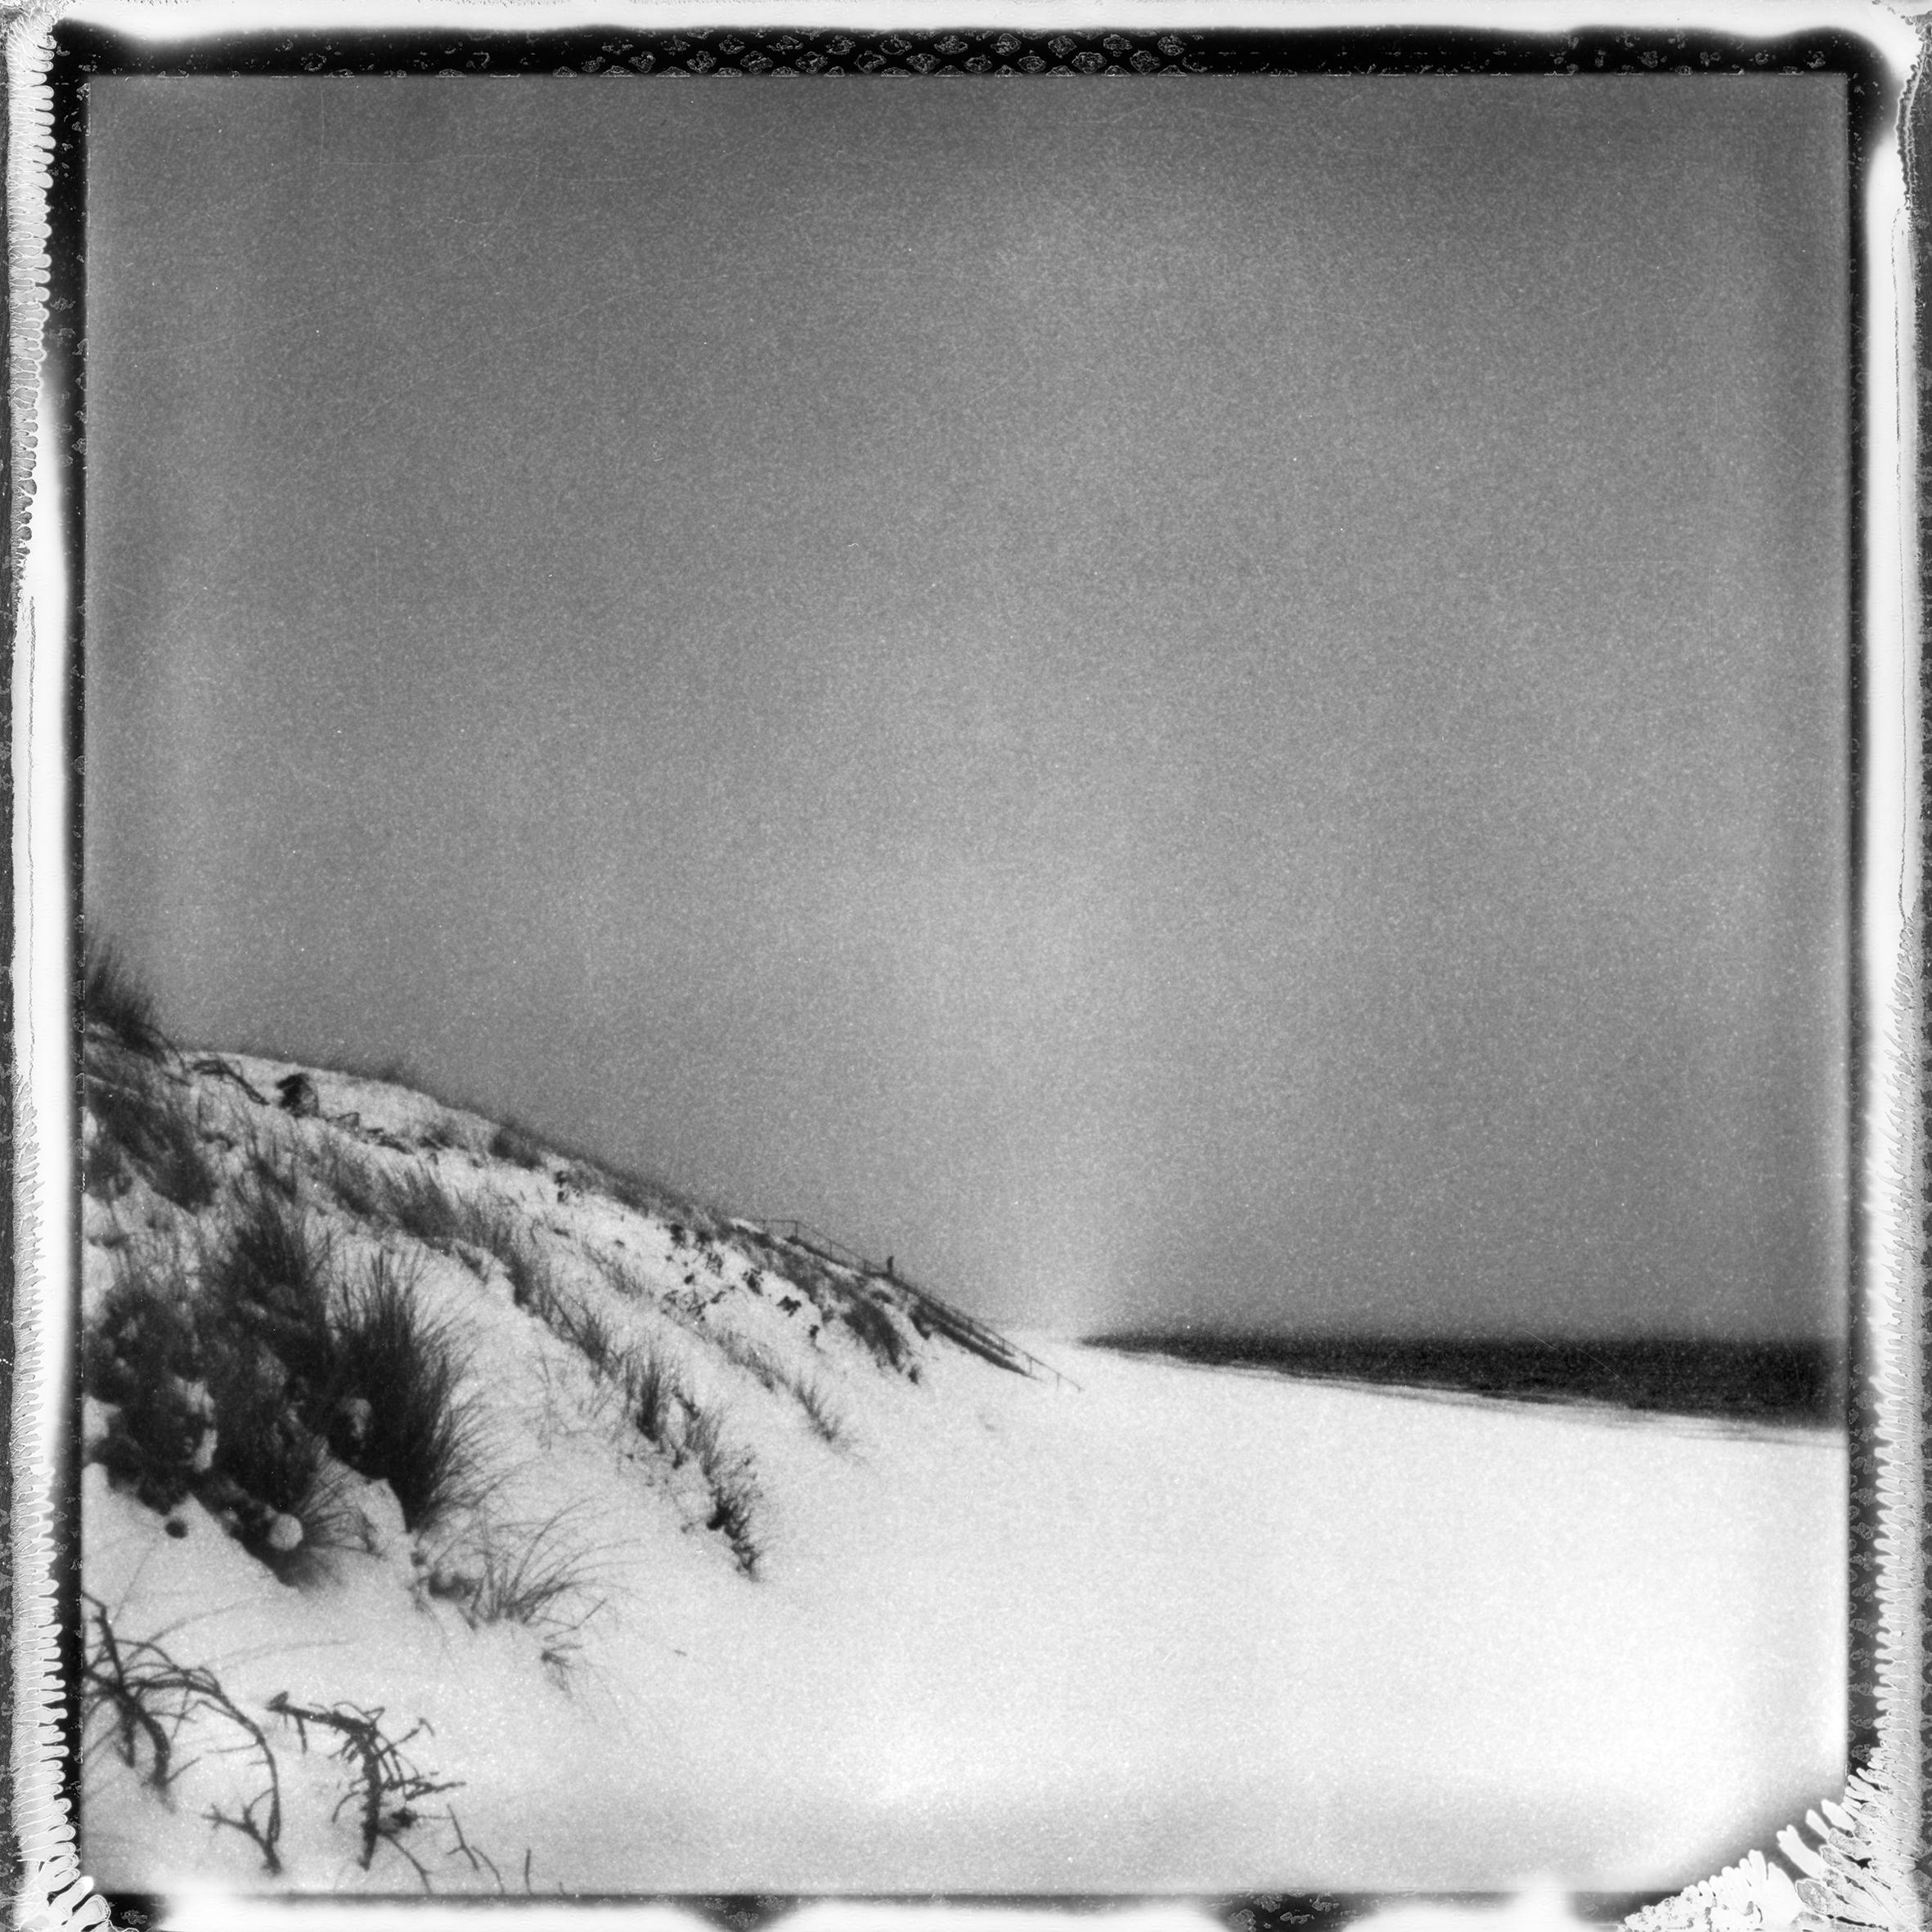 Ugne Pouwell Landscape Photograph - 'Frozen beach #2' - black and white analogue landscape photography